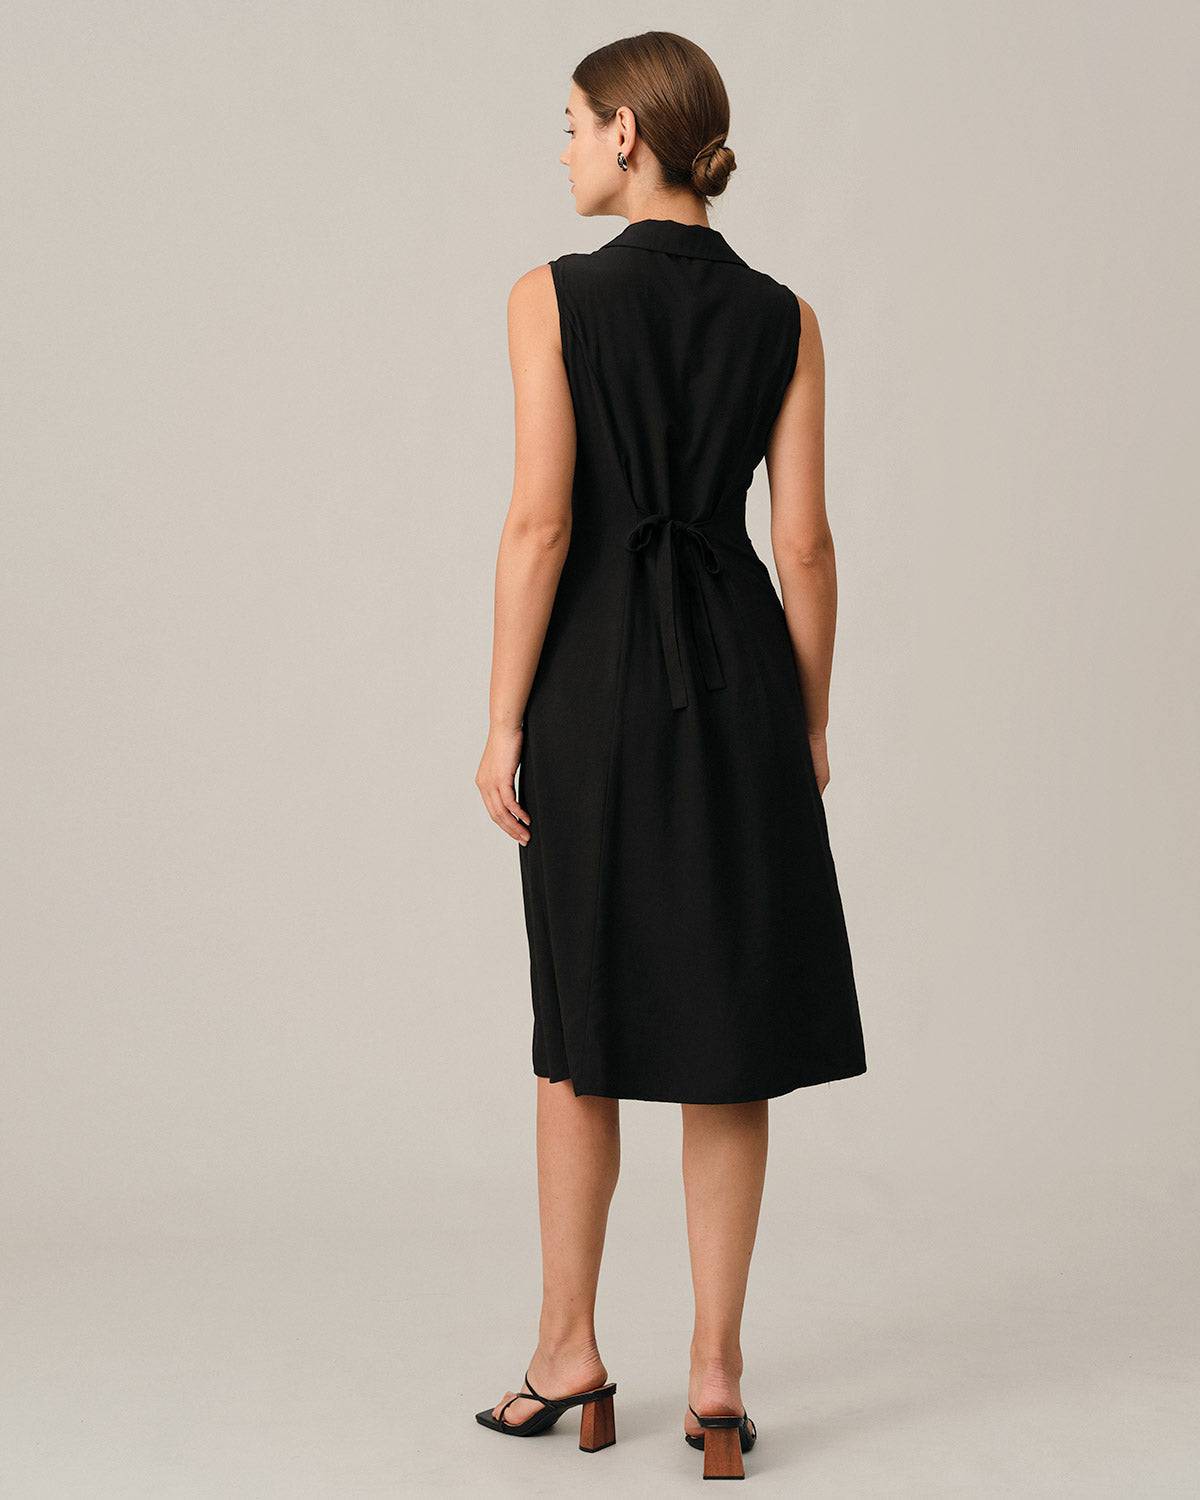 The Black V-Neck Tunic Midi Dress - Black V Neck Sleeveless Solid Midi  Dress - Black - Dresses | RIHOAS